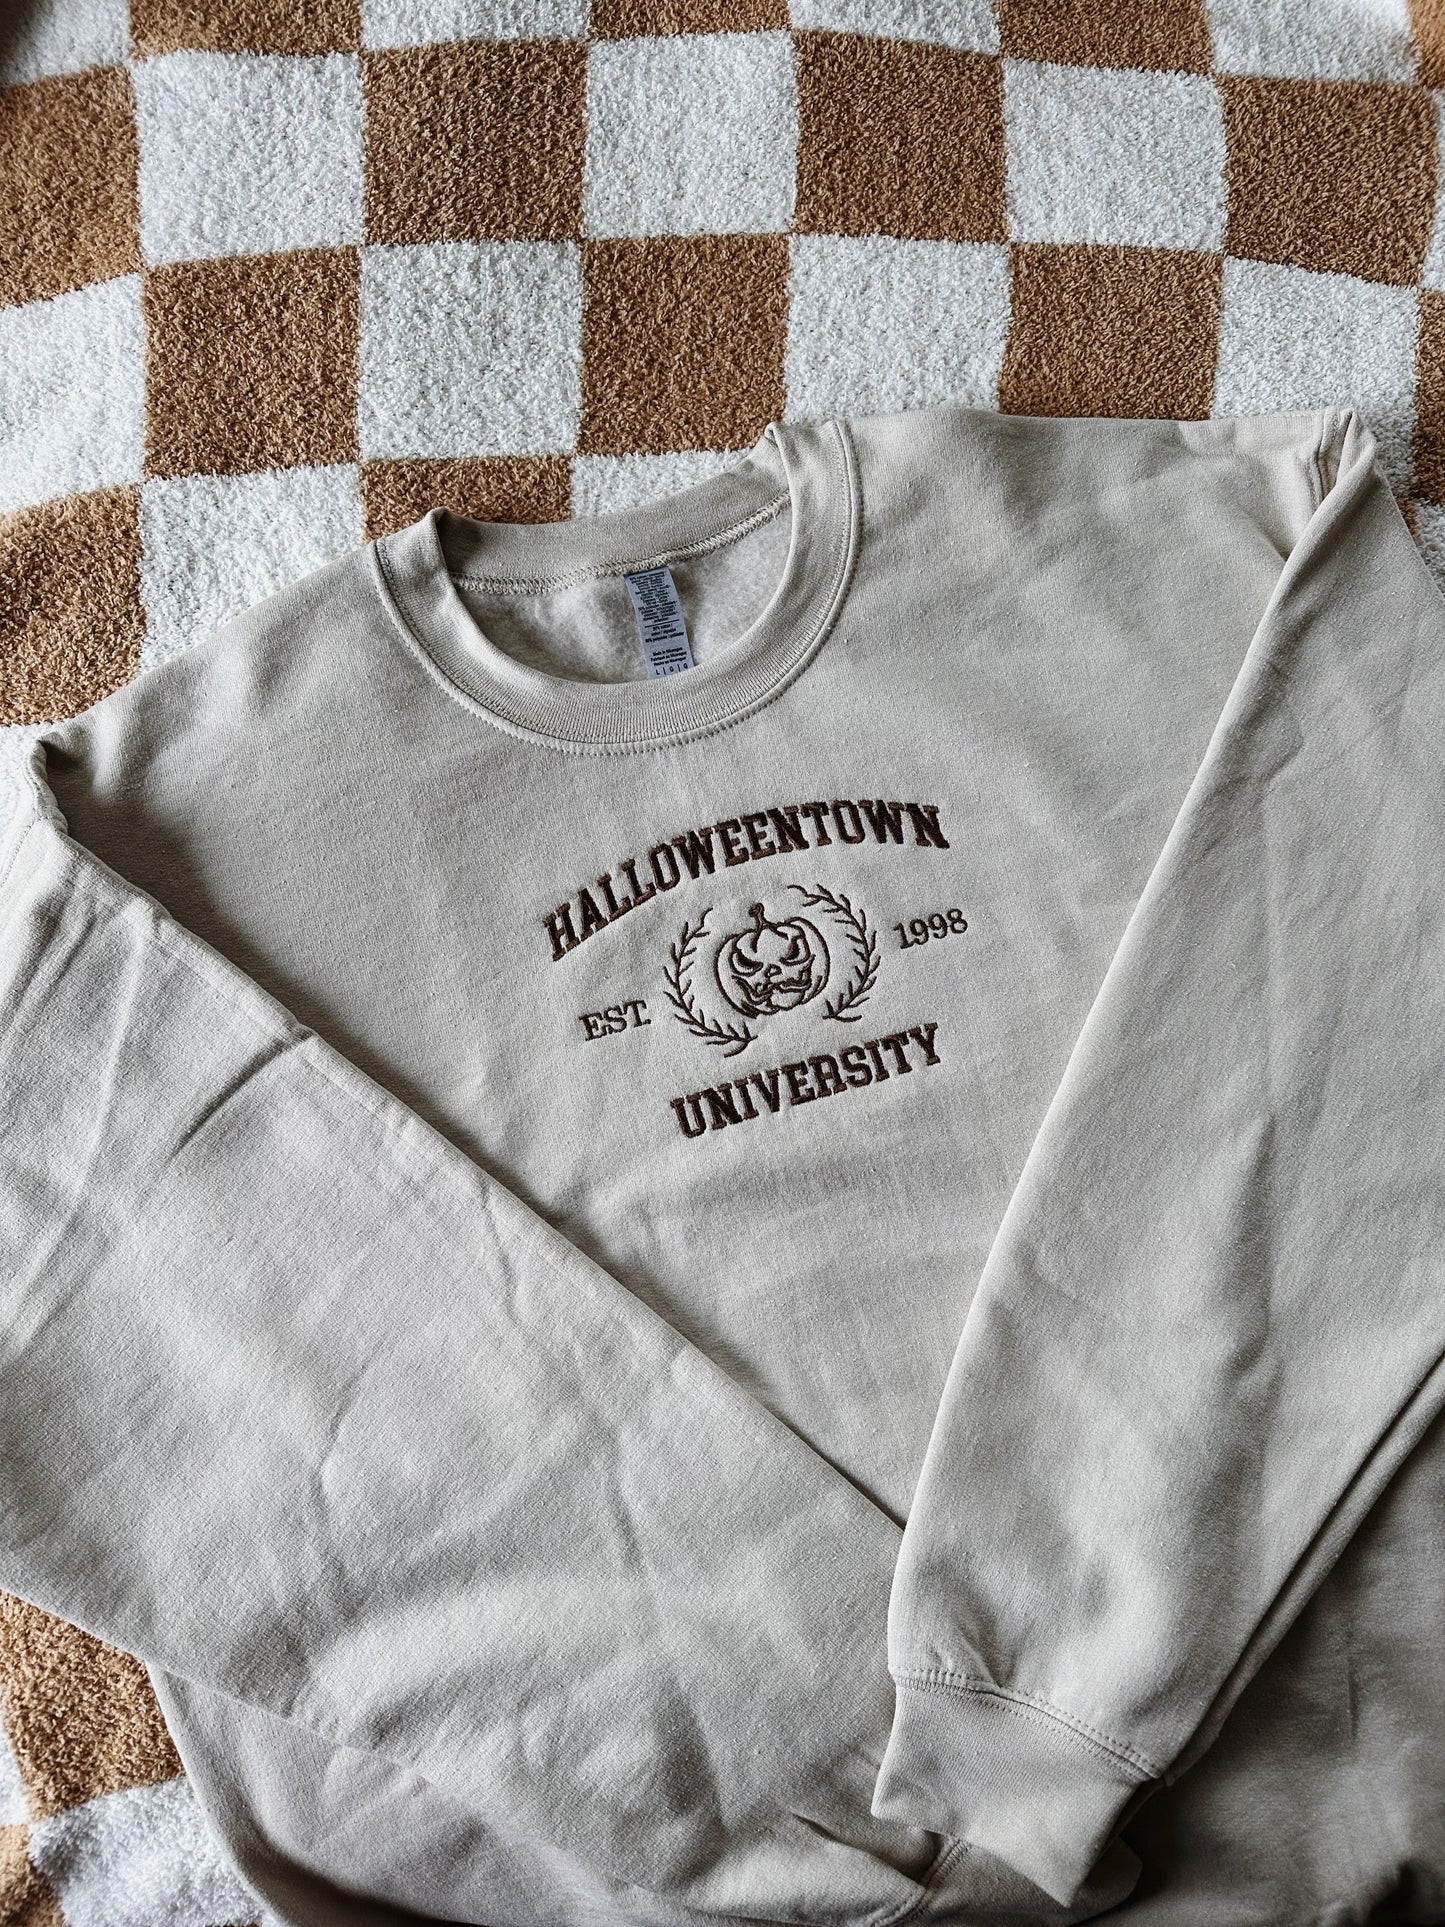 Halloweentown University - Embroidered Sweatshirt